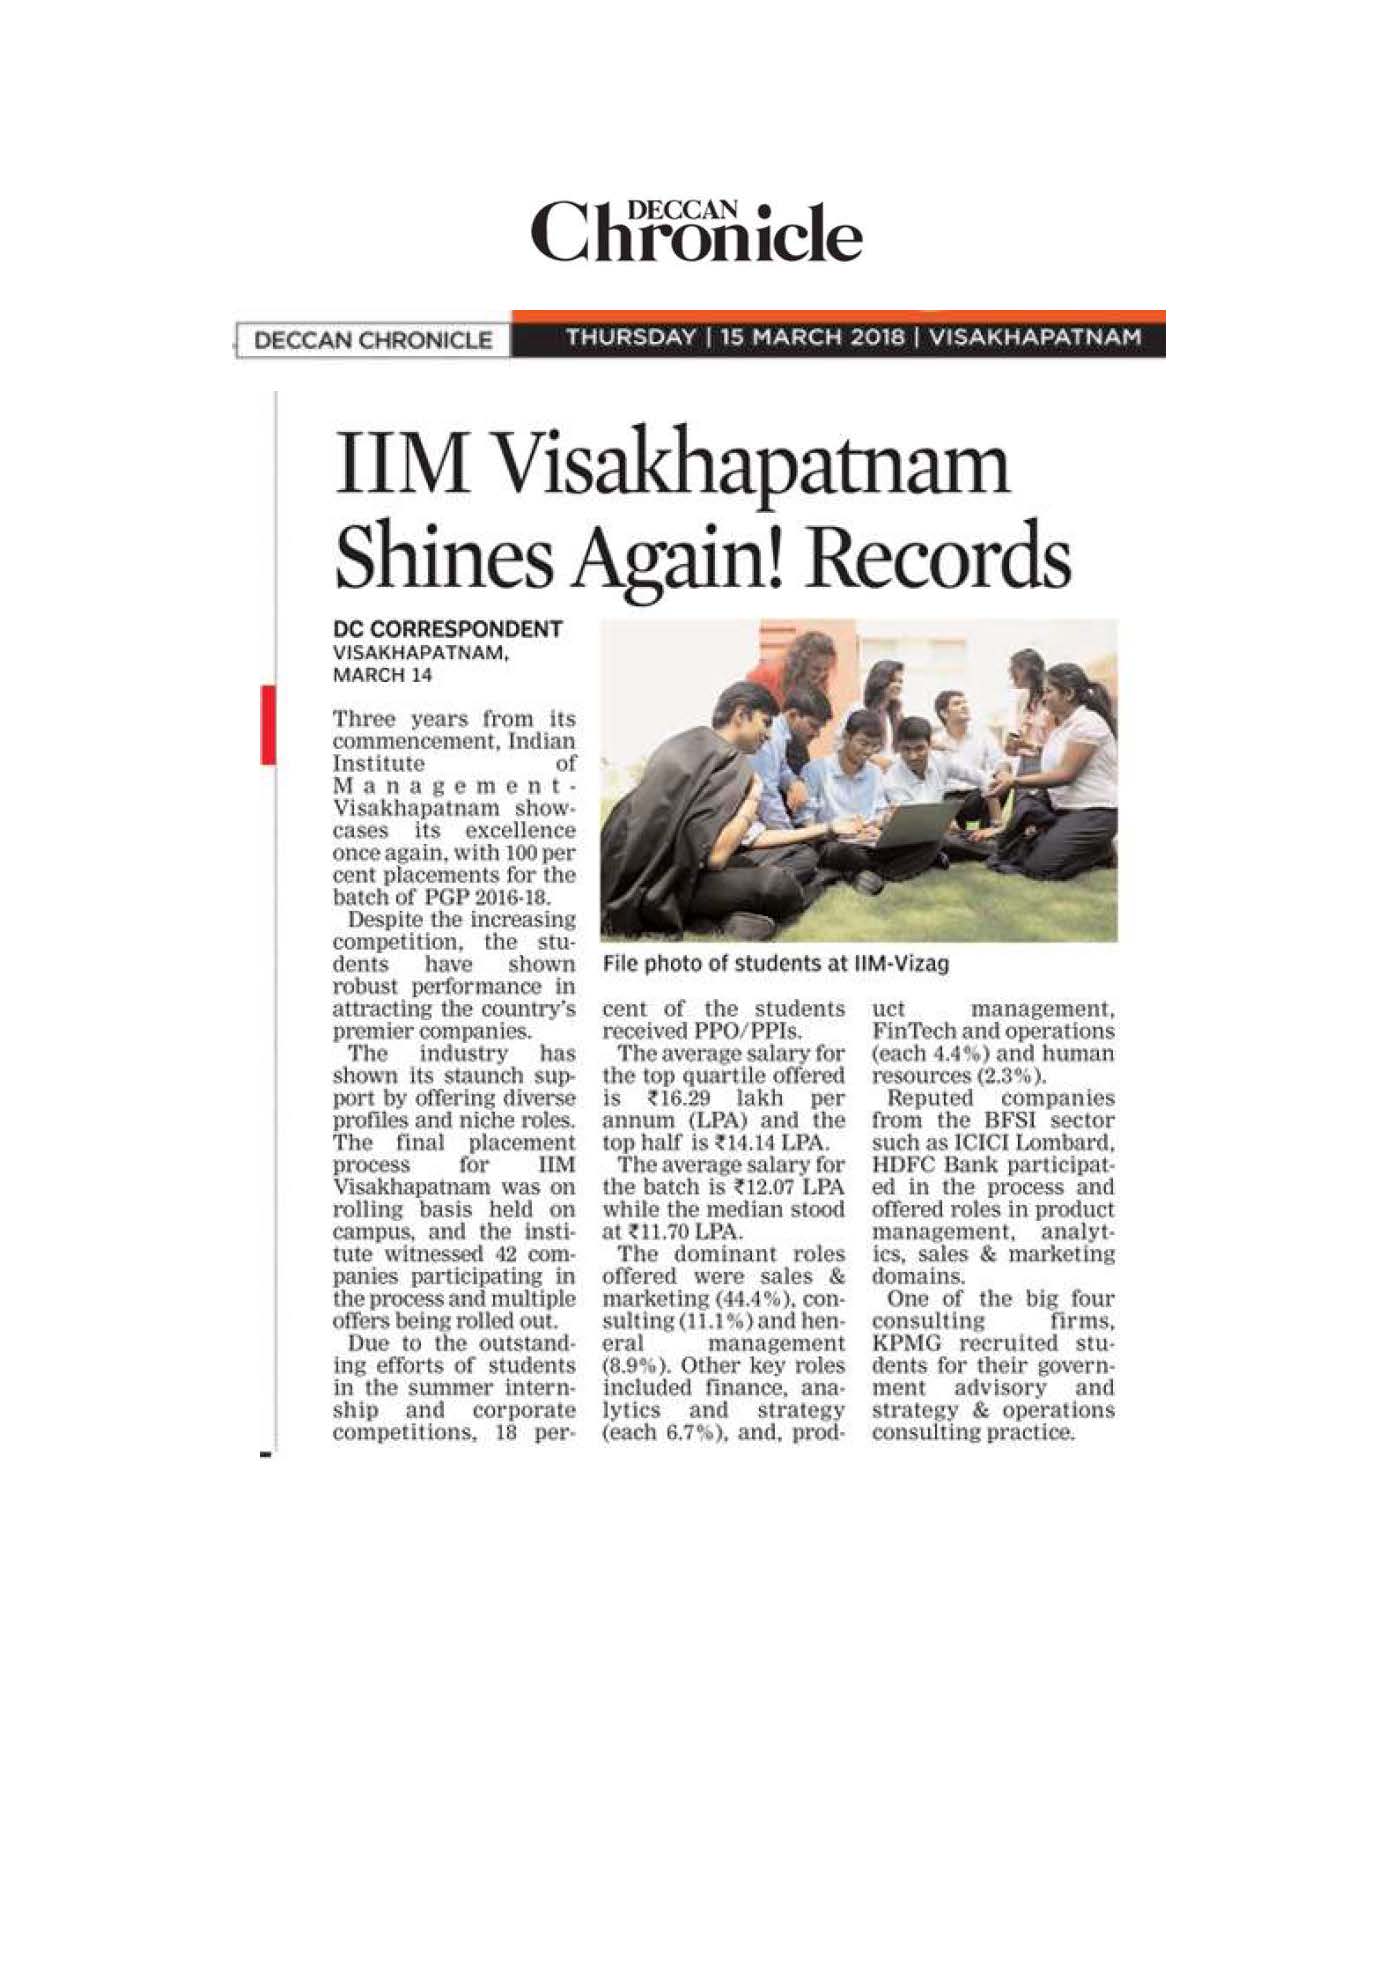 IIM Visakhapatnam shines again Records 100 percent placements - 15.03.2018